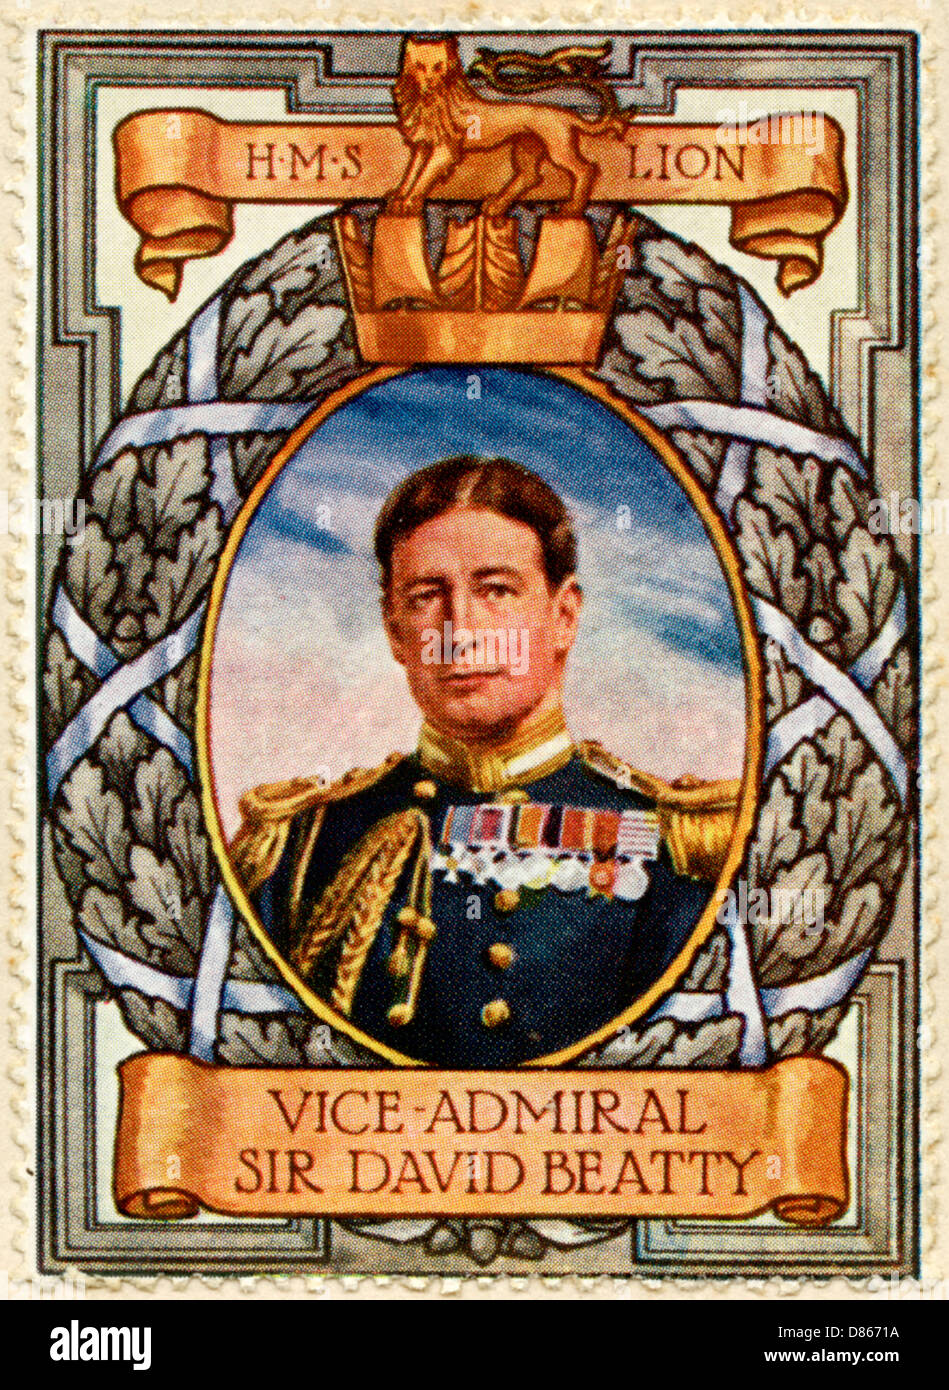 Vice Admiral David Beatty / Stamp Stock Photo